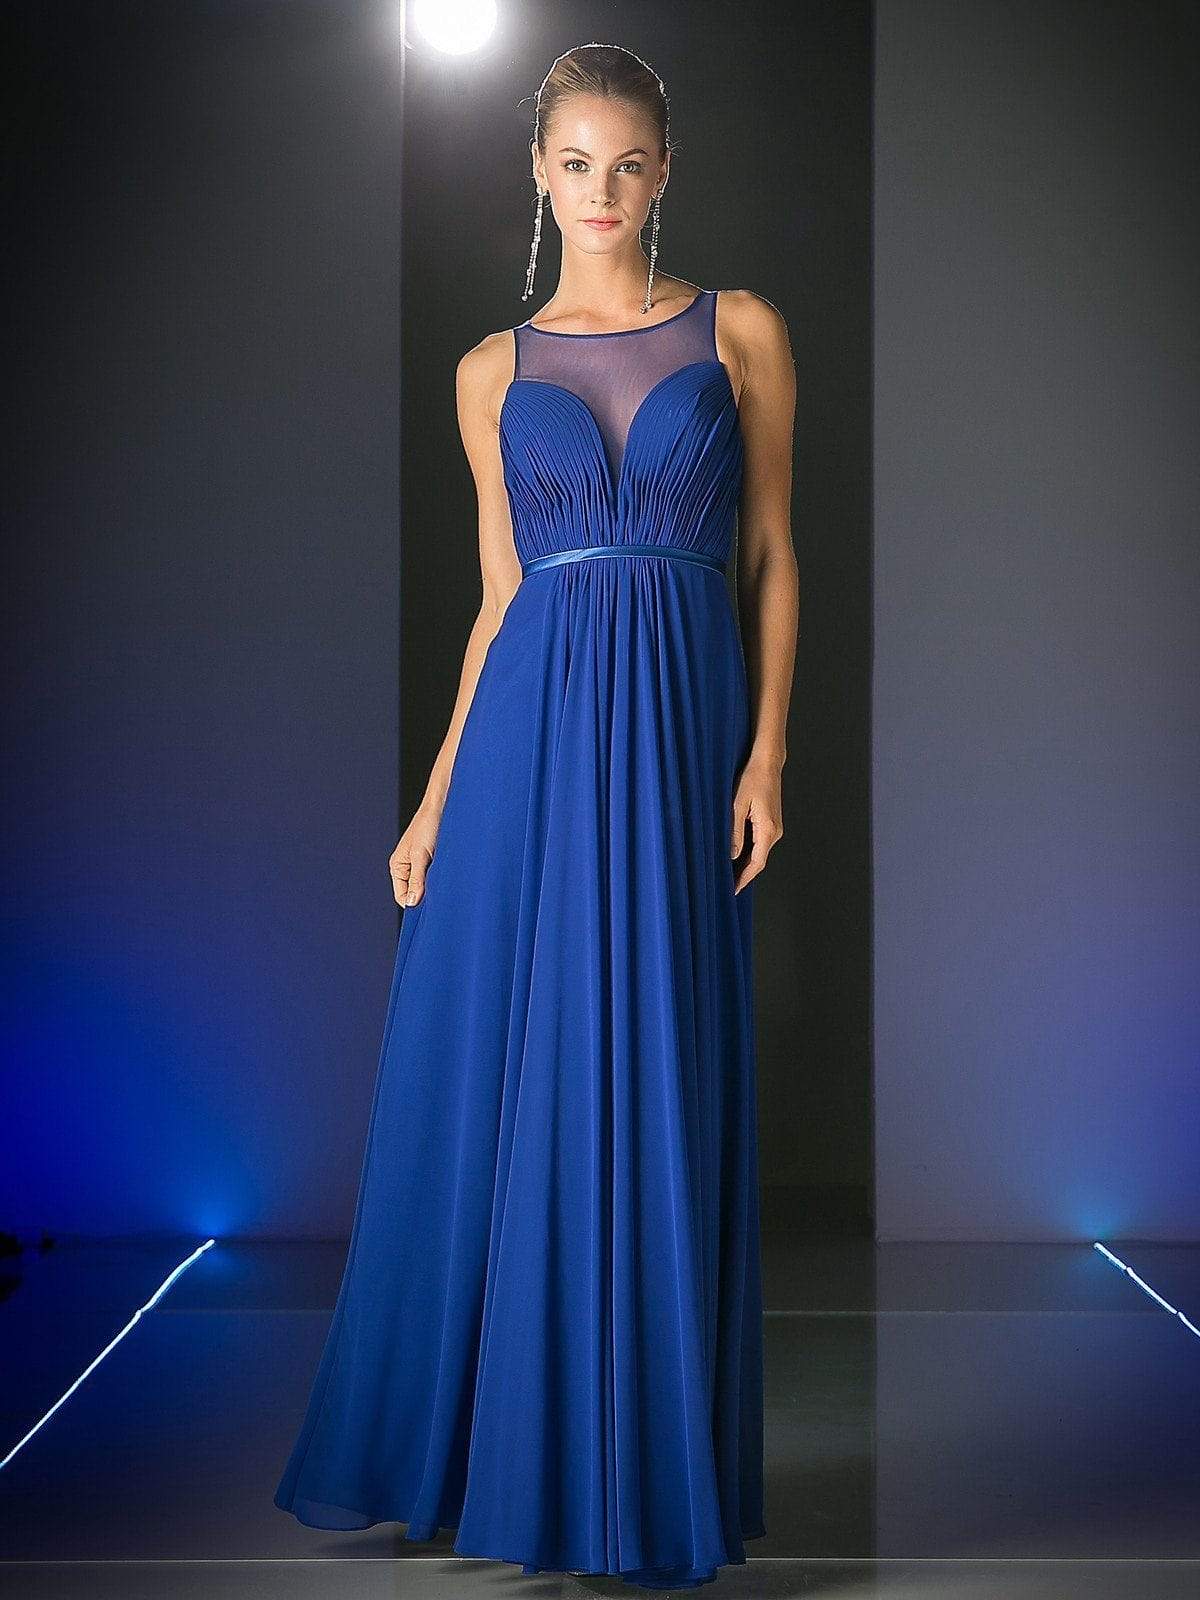 Cinderella Divine - 7458 Illusion Neckline Chiffon Empire Waist Gown Special Occasion Dress 4 / Royal